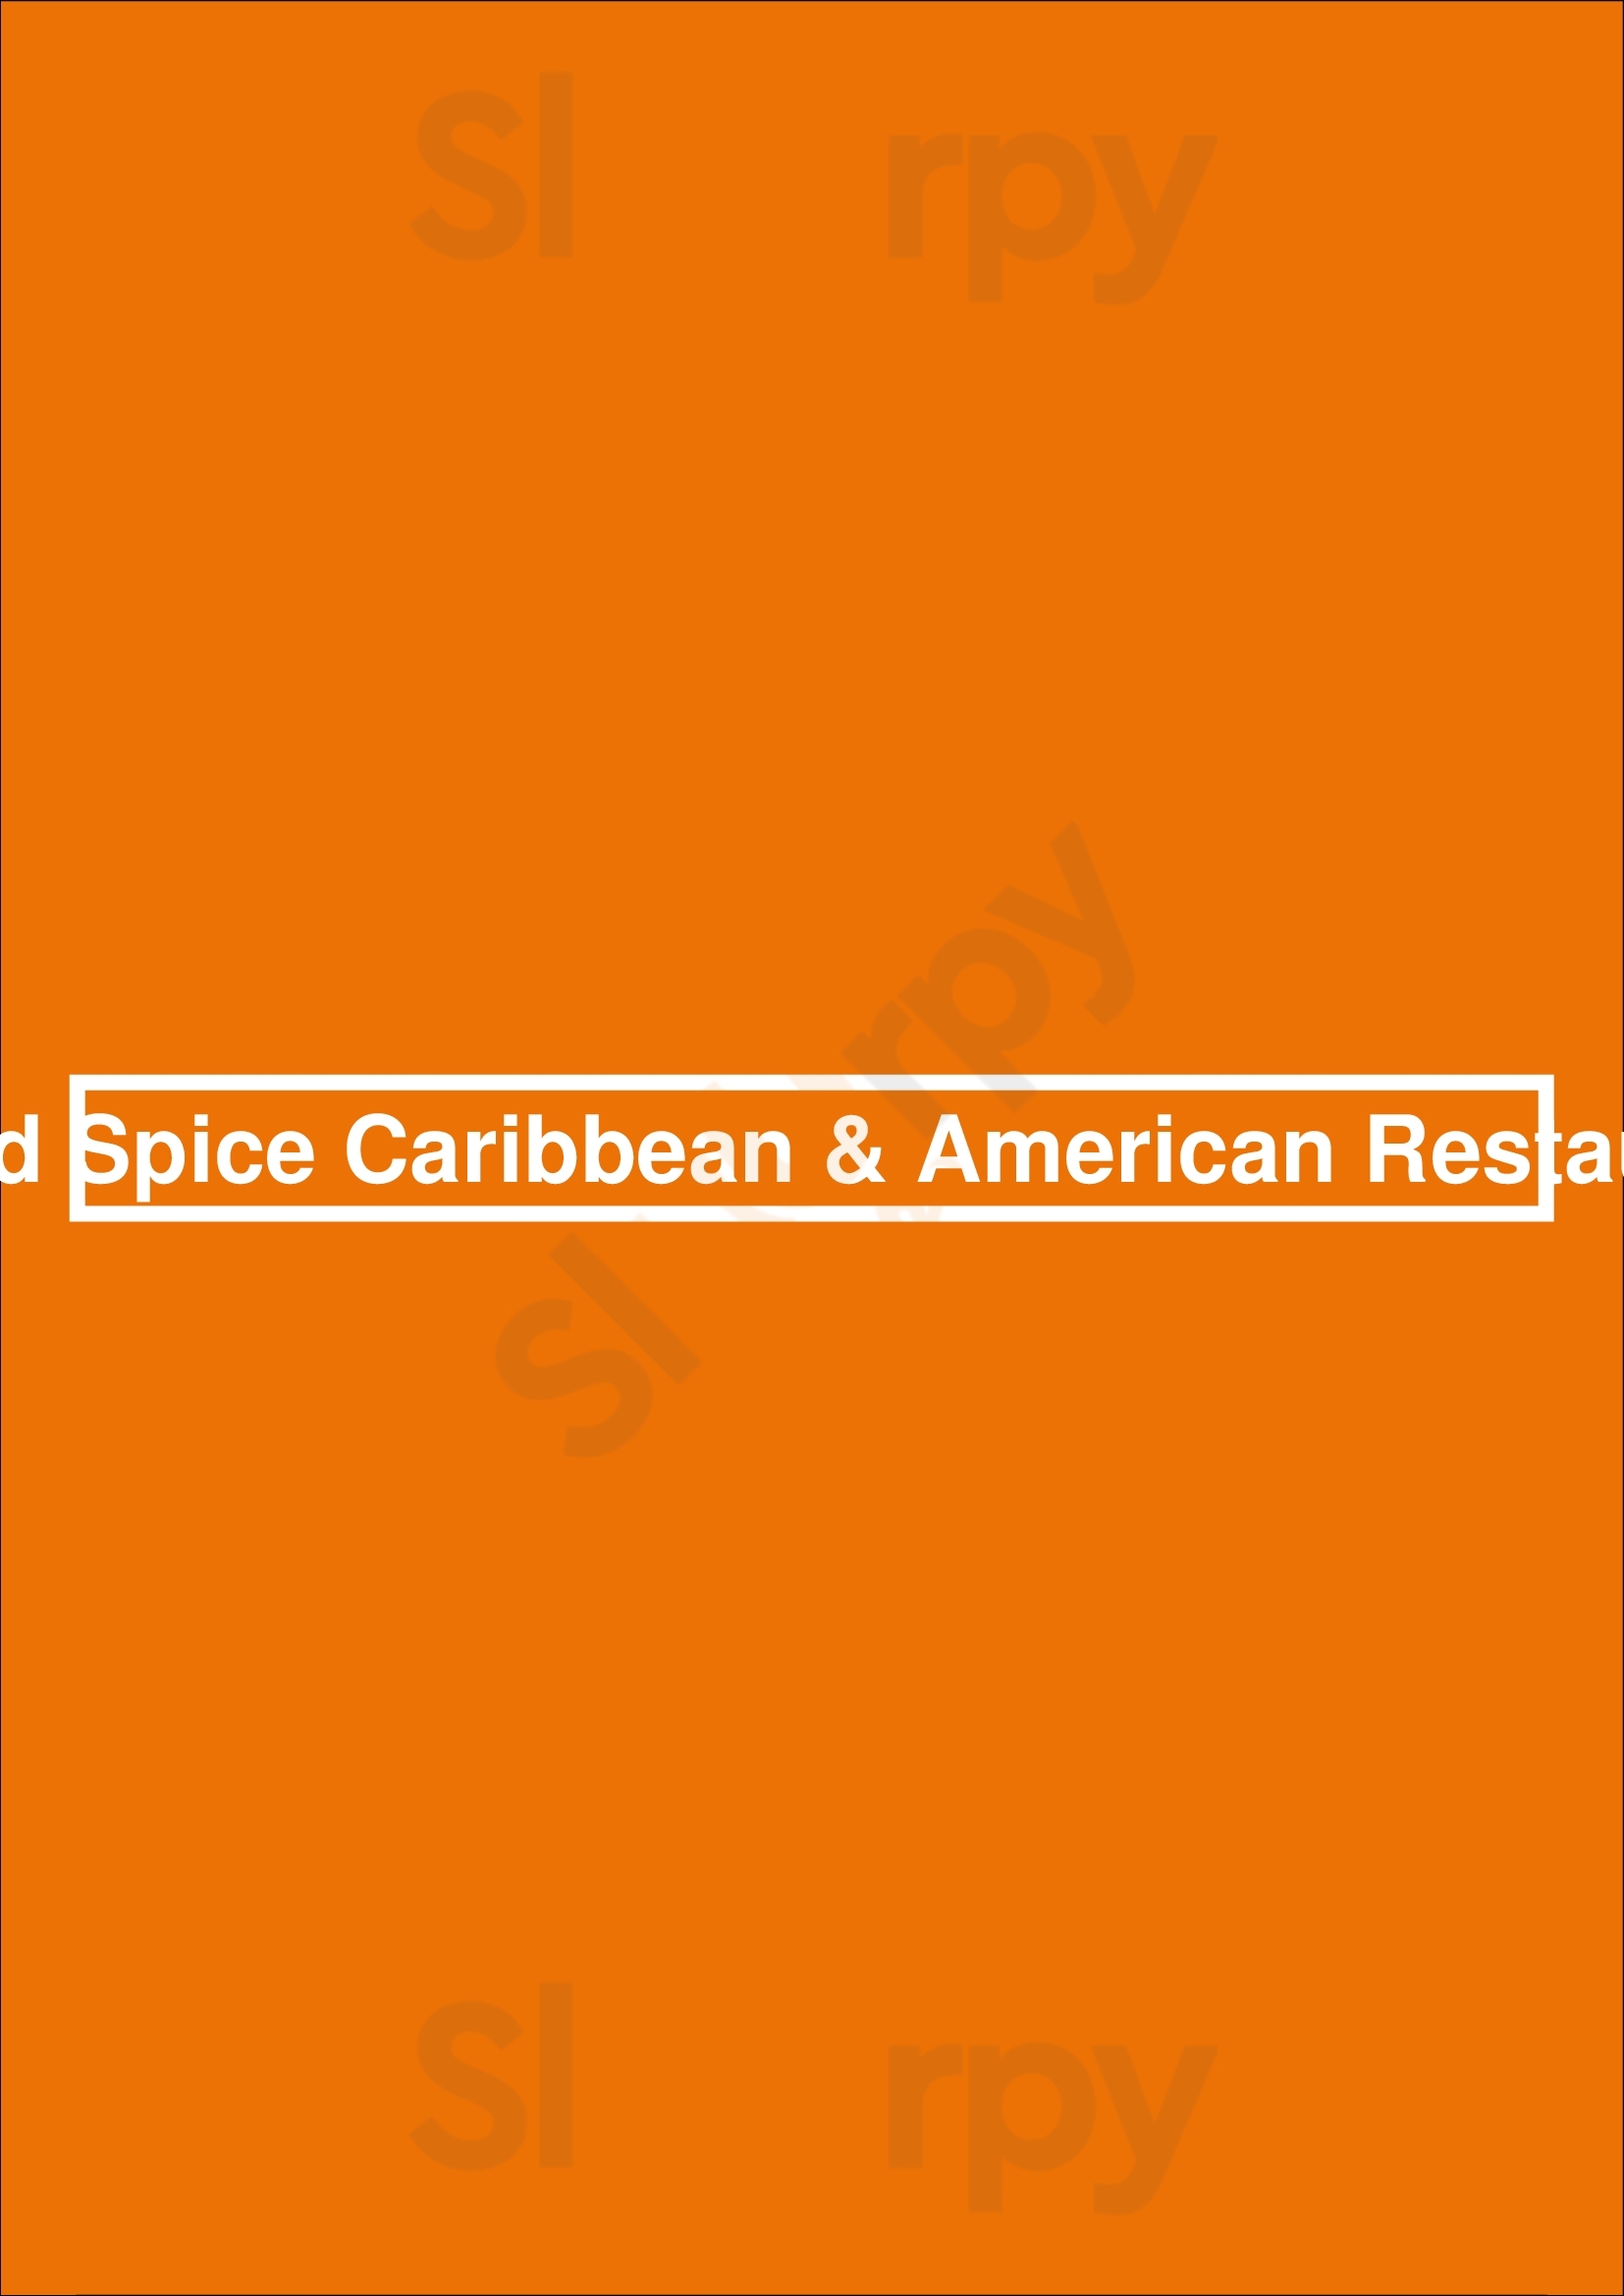 Island Spice Caribbean & American Restaurant Detroit Menu - 1